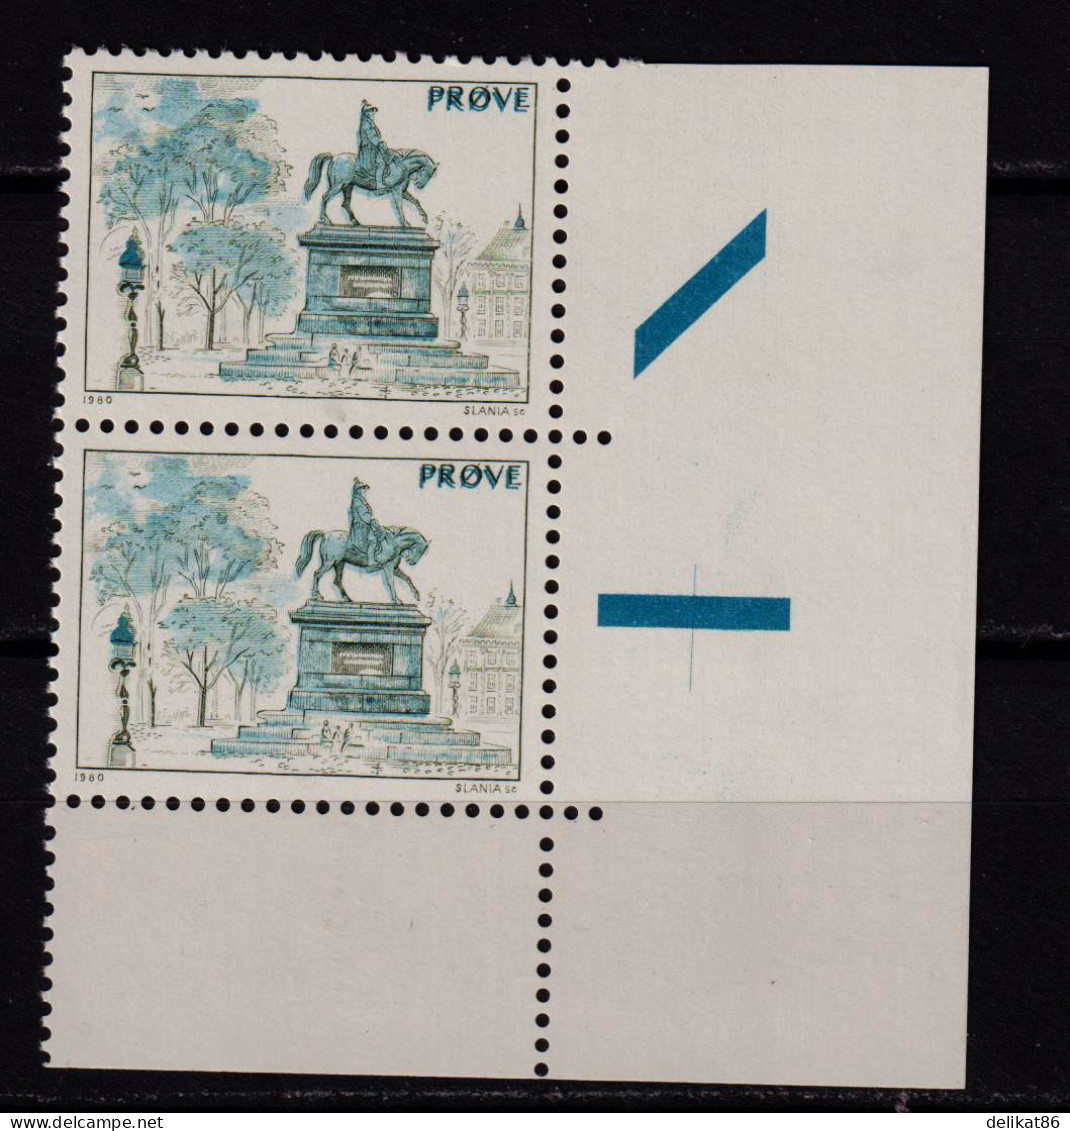 Test Stamp, Specimen, Prove, Probedruck, Reiterstandbild, Slania 1980 - 1985 Doppelmarke Unterere Rand - Ensayos & Reimpresiones